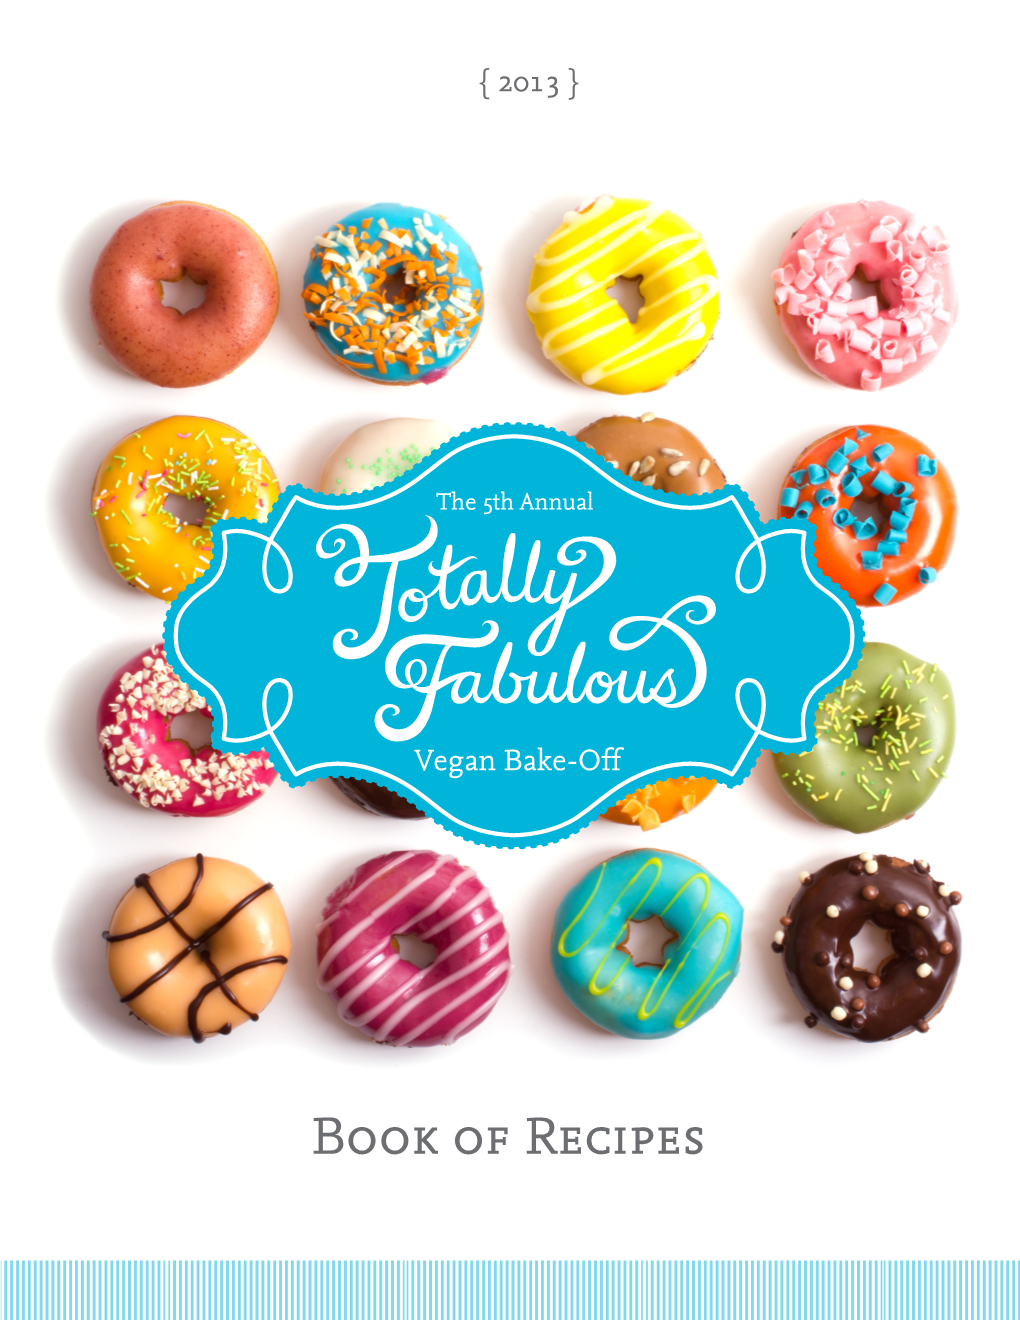 Book of Recipes Peanut Butter Cookie Dough Truffles